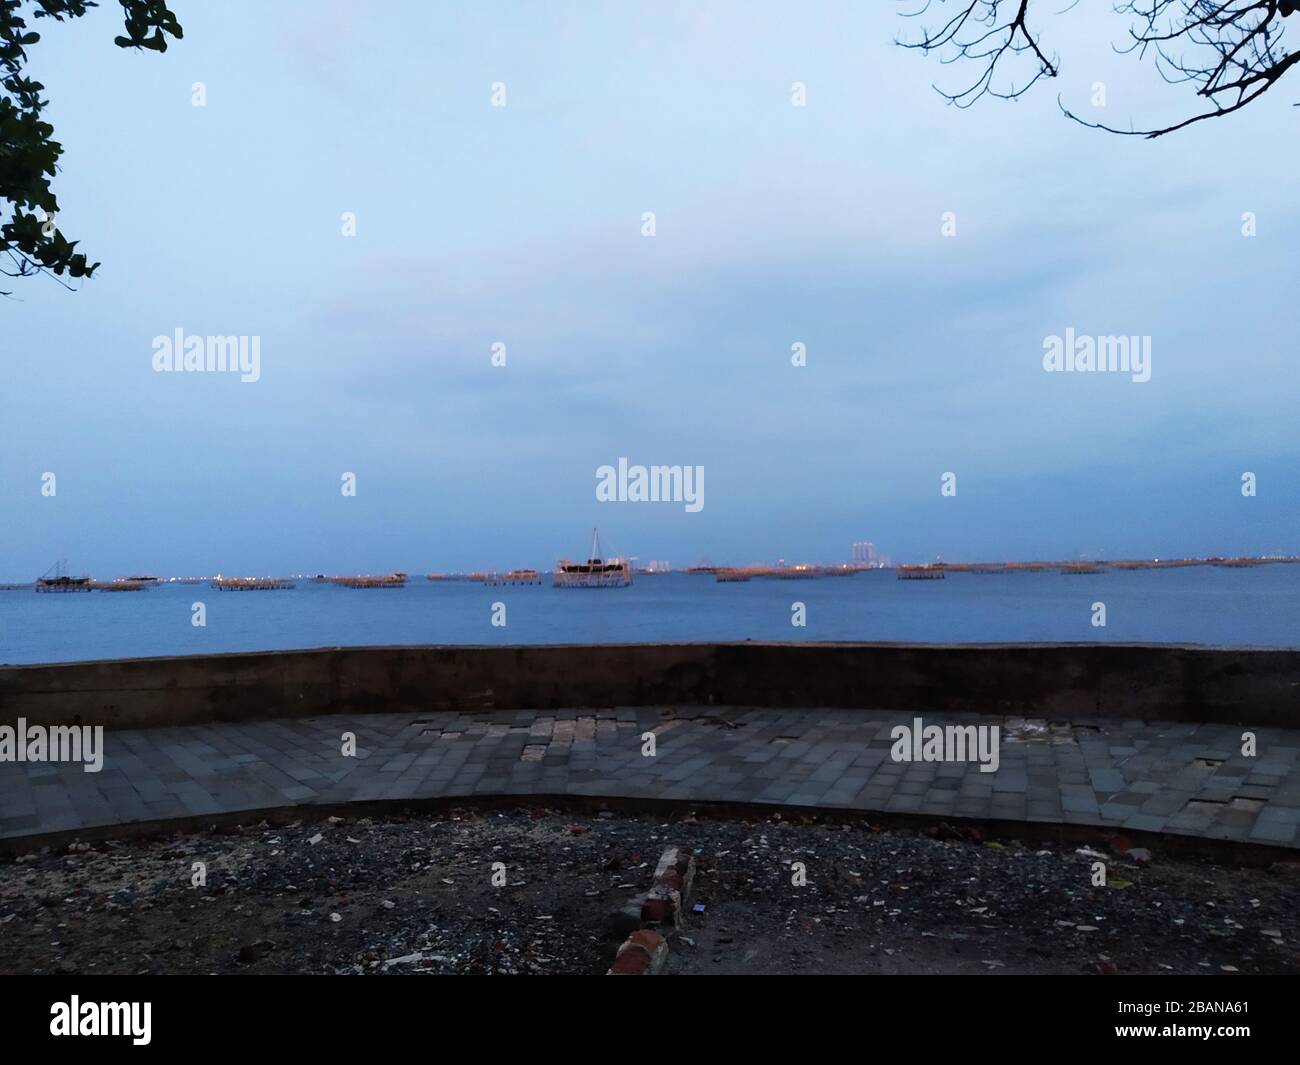 Views of the calm ocean of an island Stock Photo